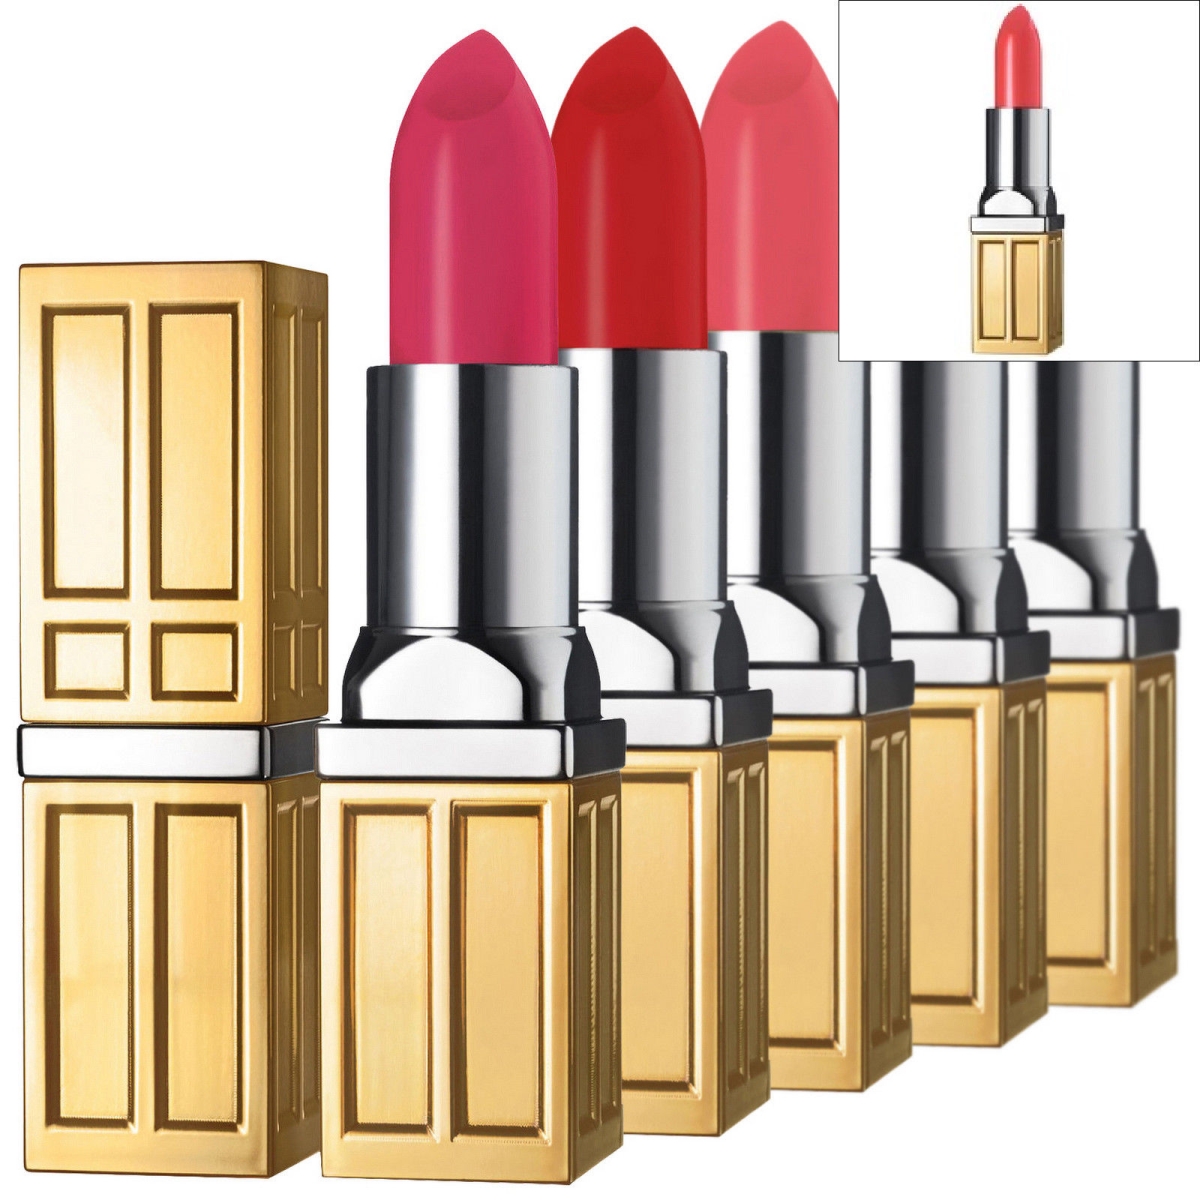 W-c-10416 0.12 Oz Beautiful Color Moisturizing Lipstick For Women - No. 42 Matte Coral Crush